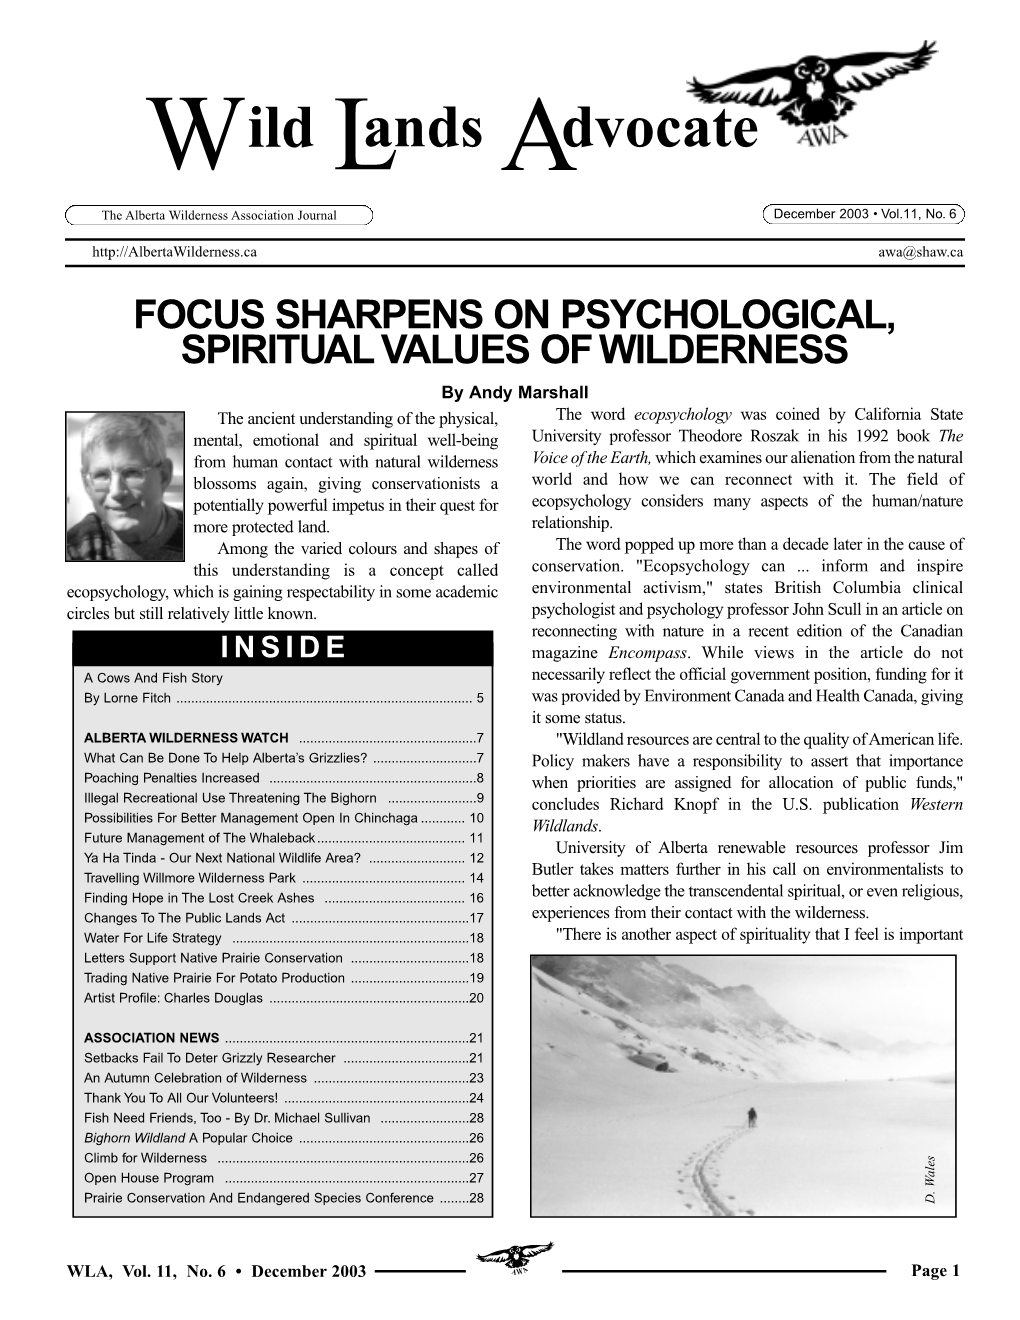 Wild Lands Advocate Vol. 11, No. 6, December 2003